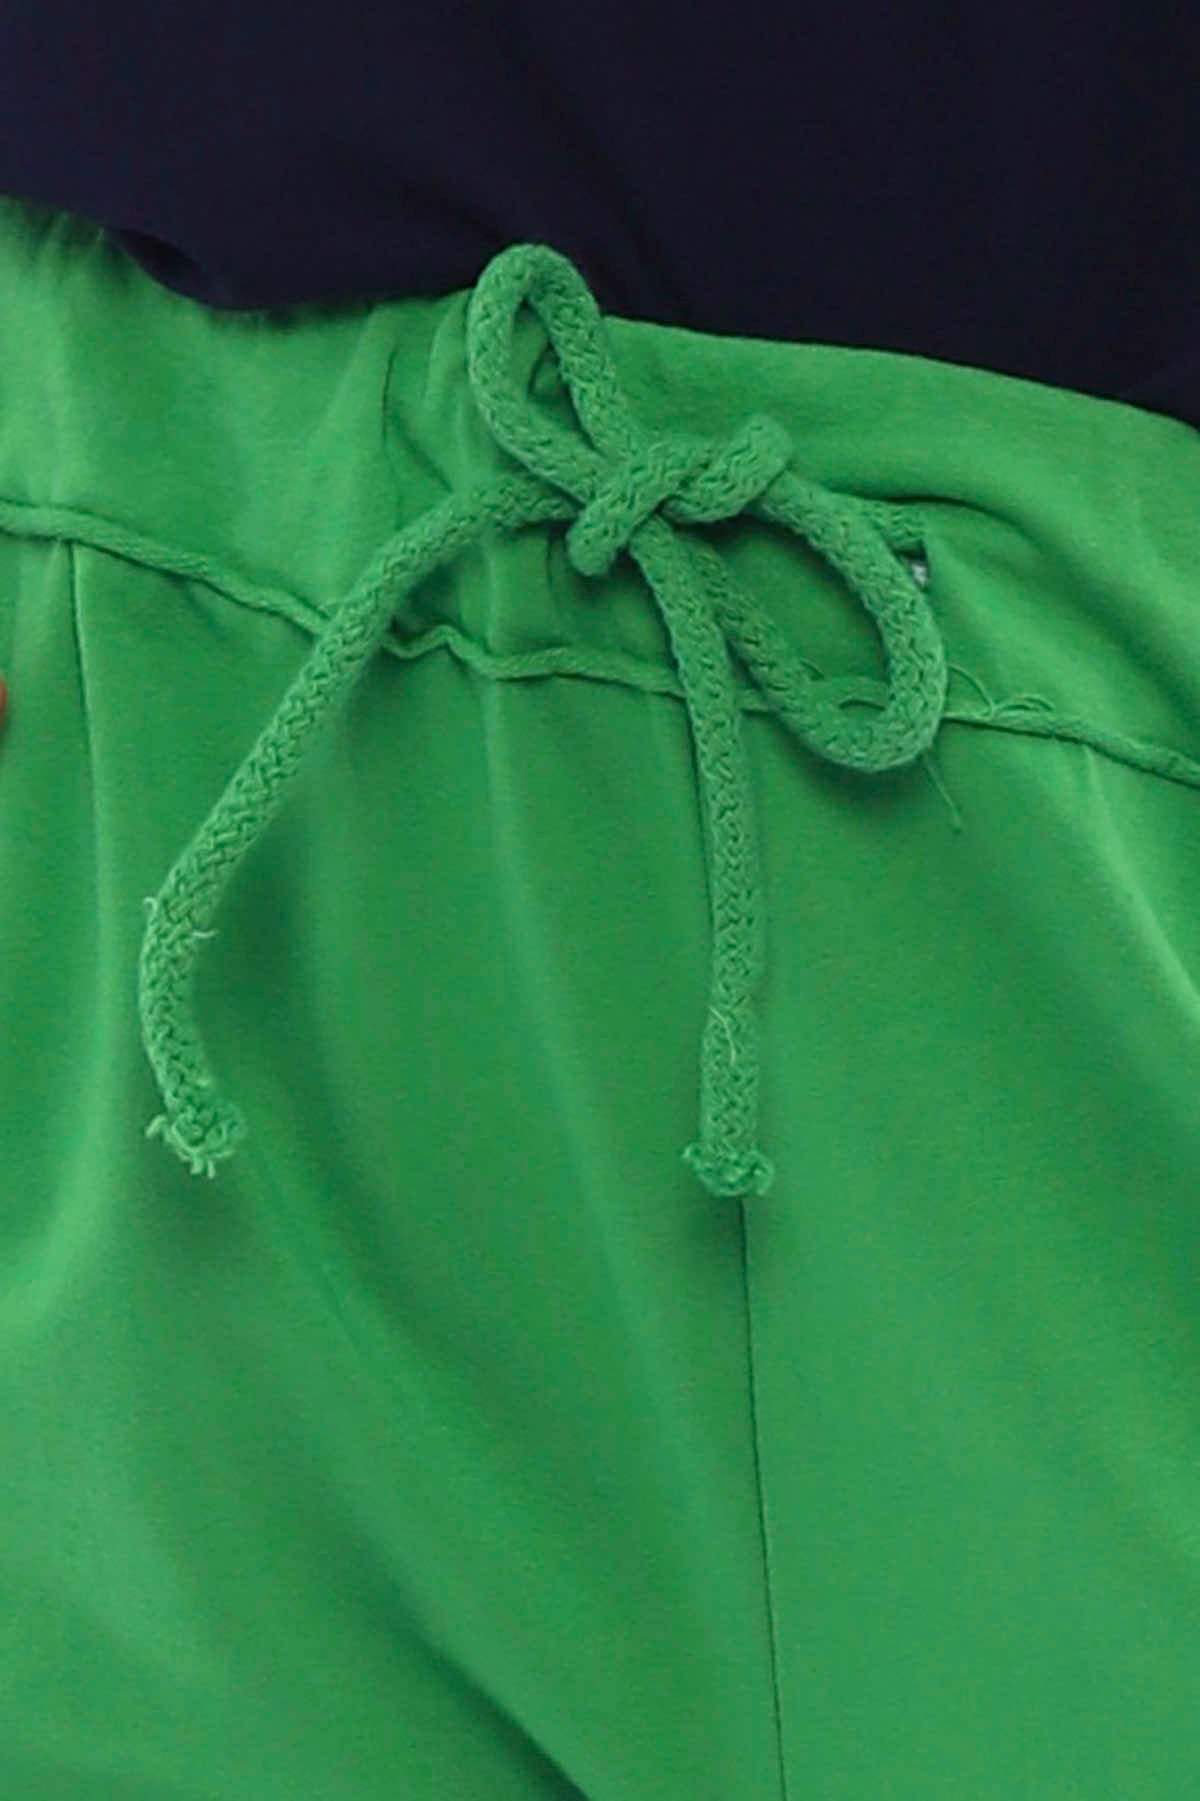 Didcot Jersey Pants Emerald